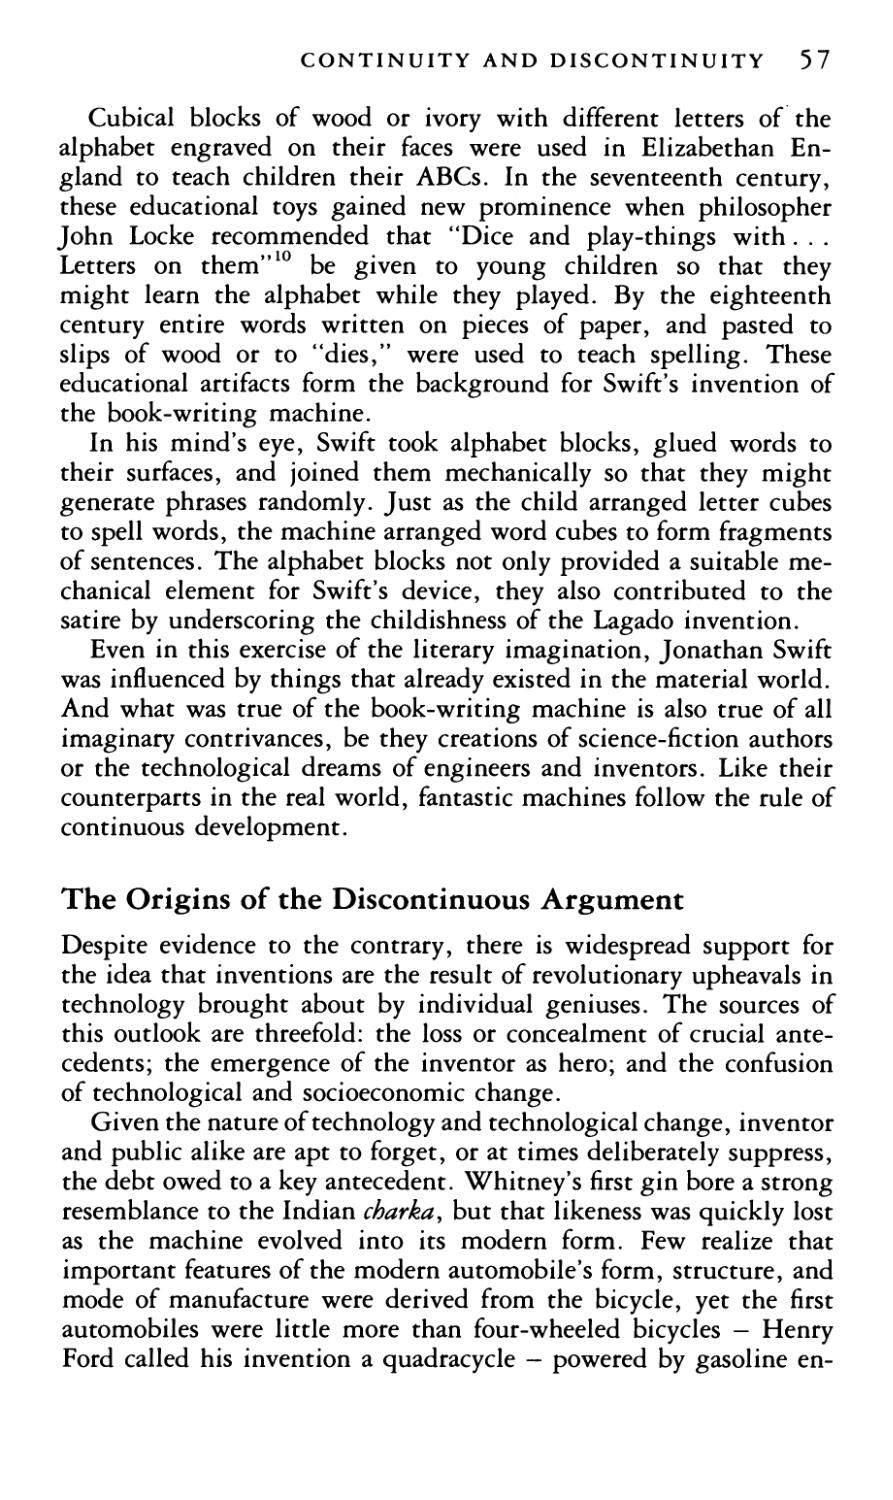 The Origins of the Discontinuous Argument